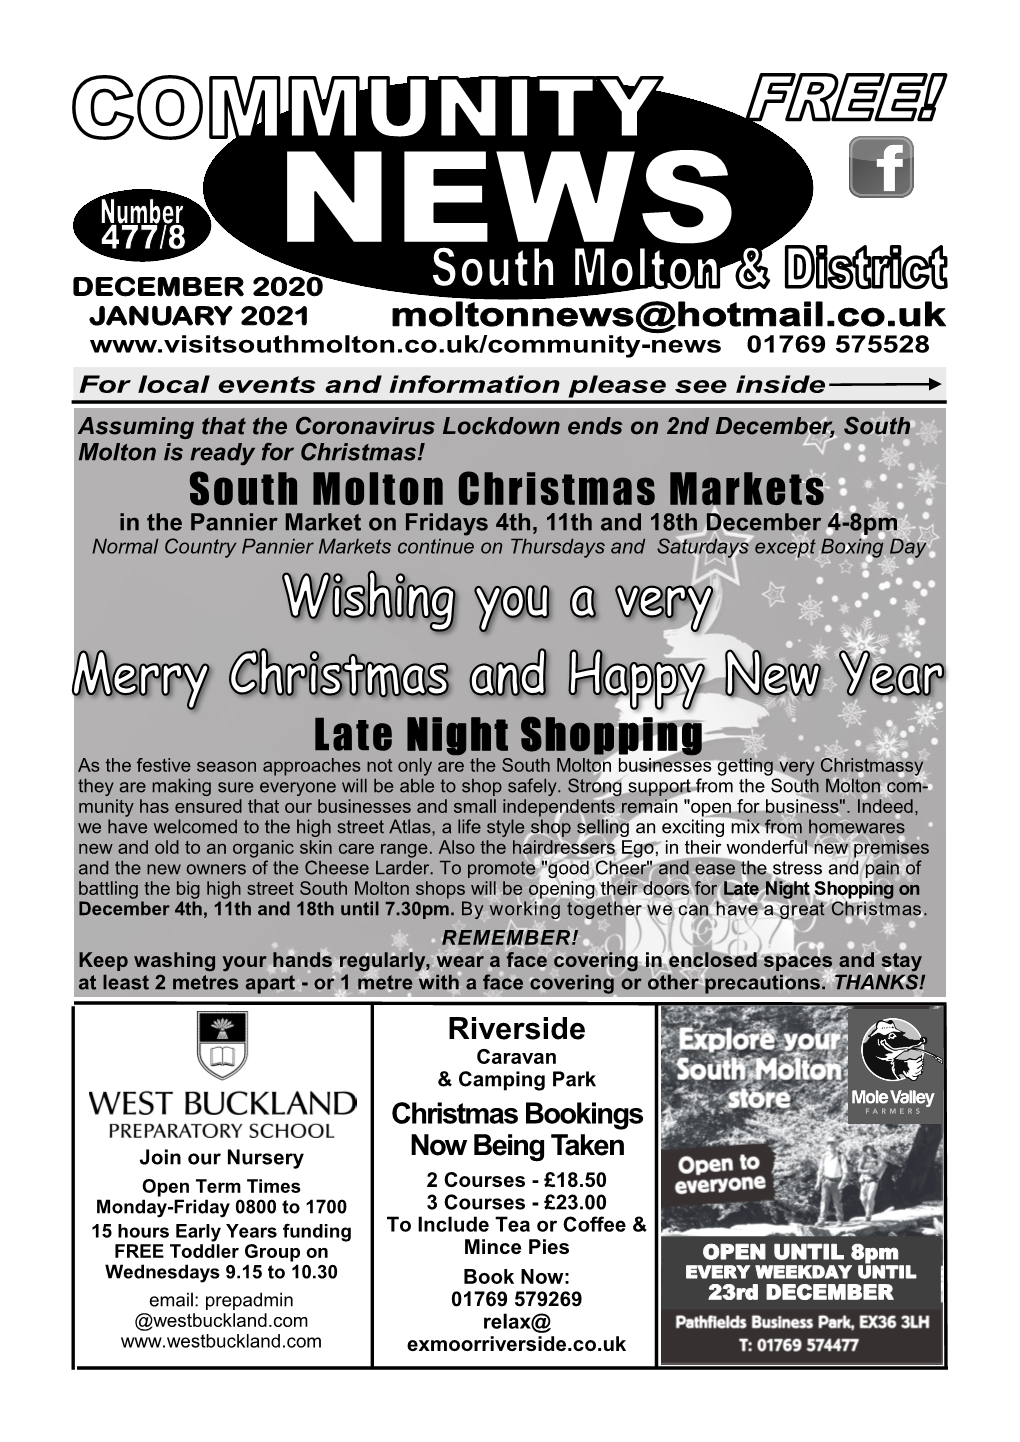 South Molton Christmas Markets Late Night Shopping